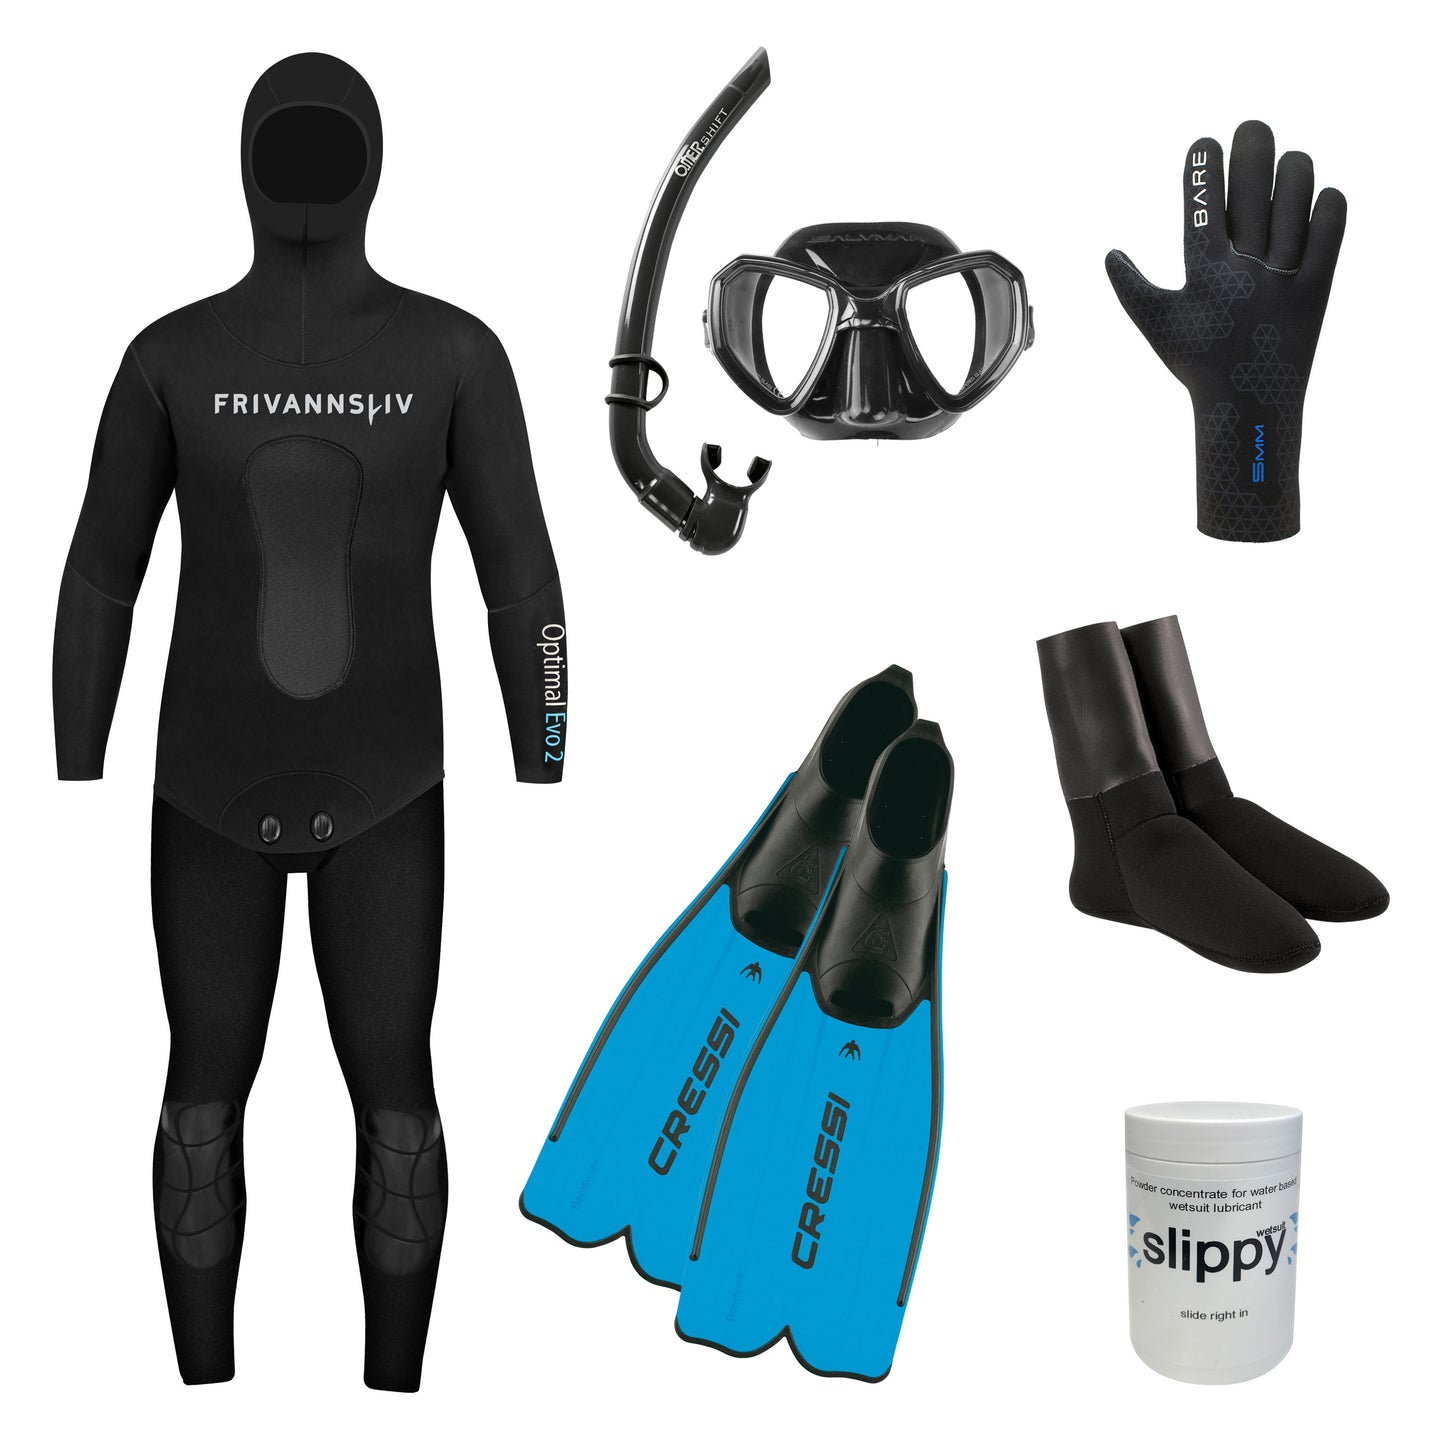 Equipment package Explorer water sports